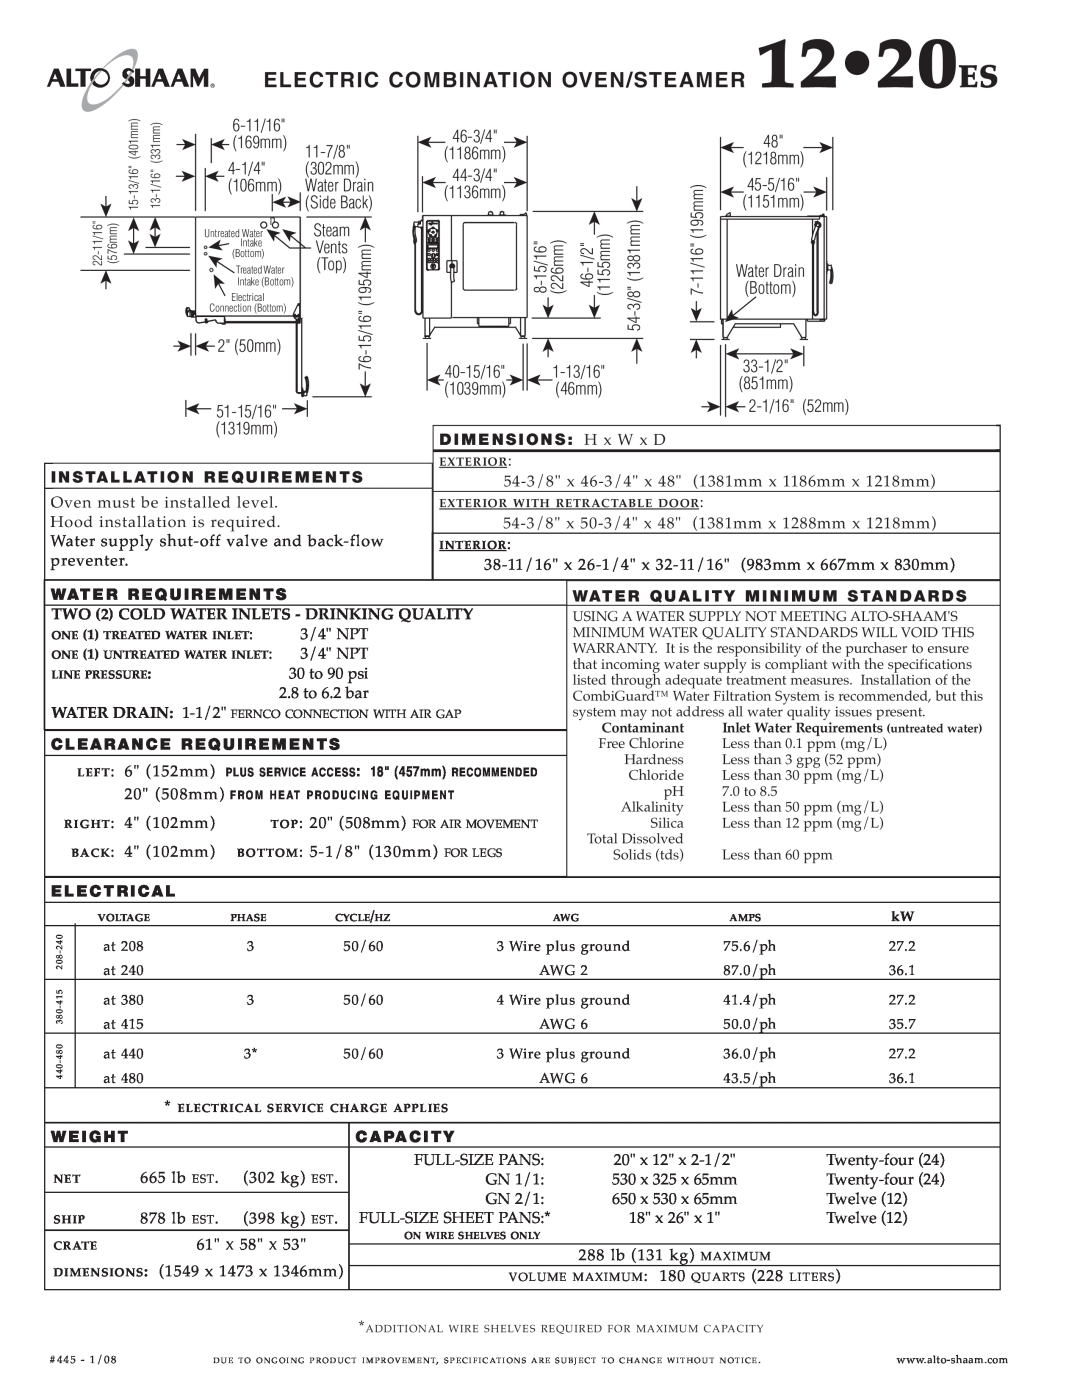 Alto-Shaam 12.20ES specifications ELEC TRIC COMBIN ATIO N OVEN/ STE AME R 12 20ES 